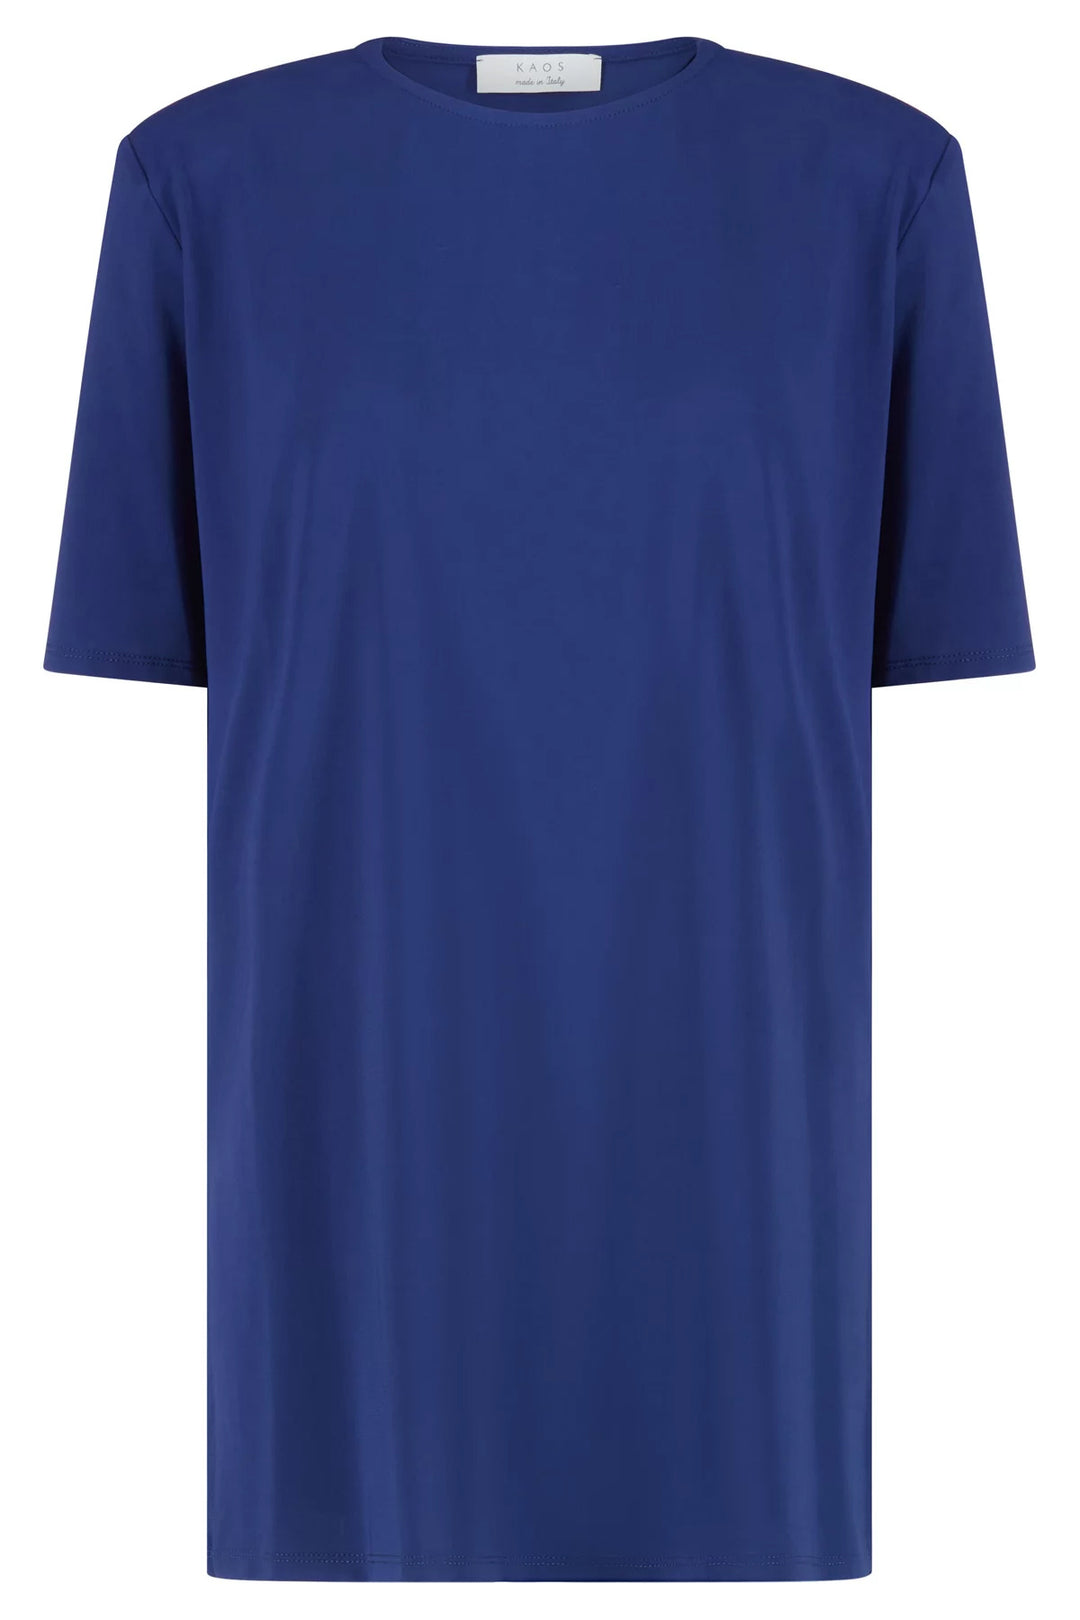 KAOS Maxi t-shirt con spacco in jersey crepe blu - Mancinelli 1954